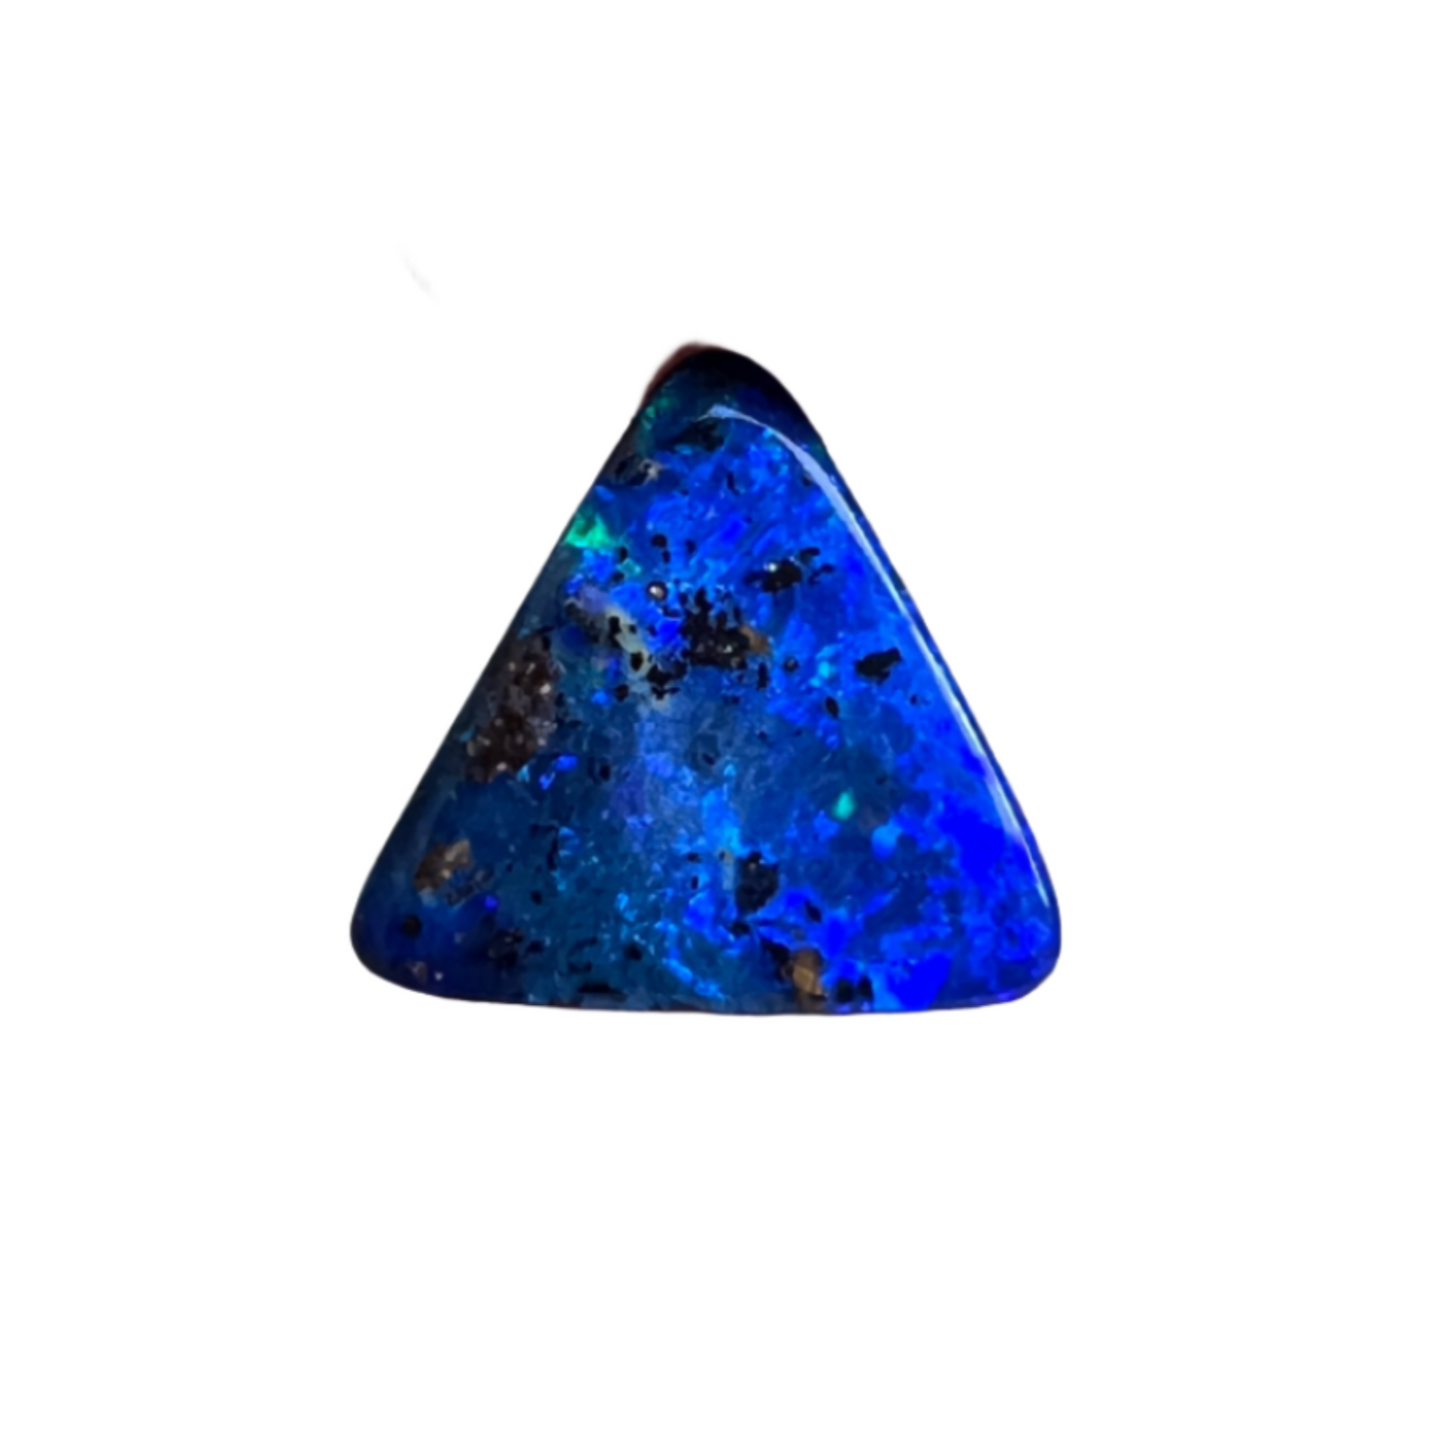 3.30 blue triangle boulder opal